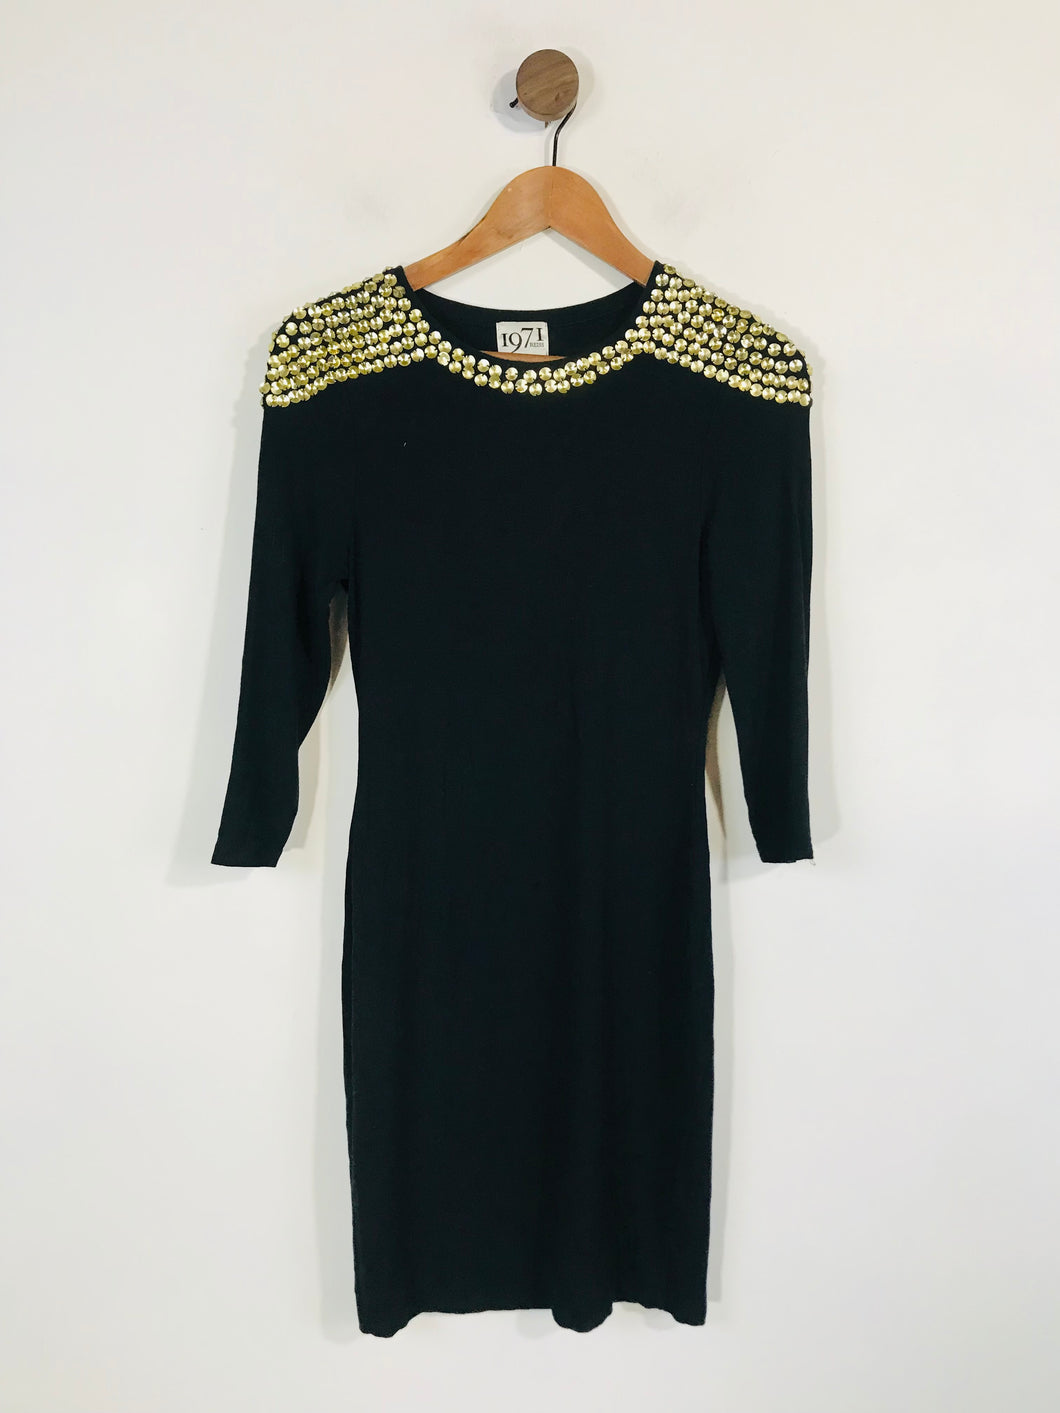 Reiss Women's Embroidered Mini Dress | XS UK6-8 | Black